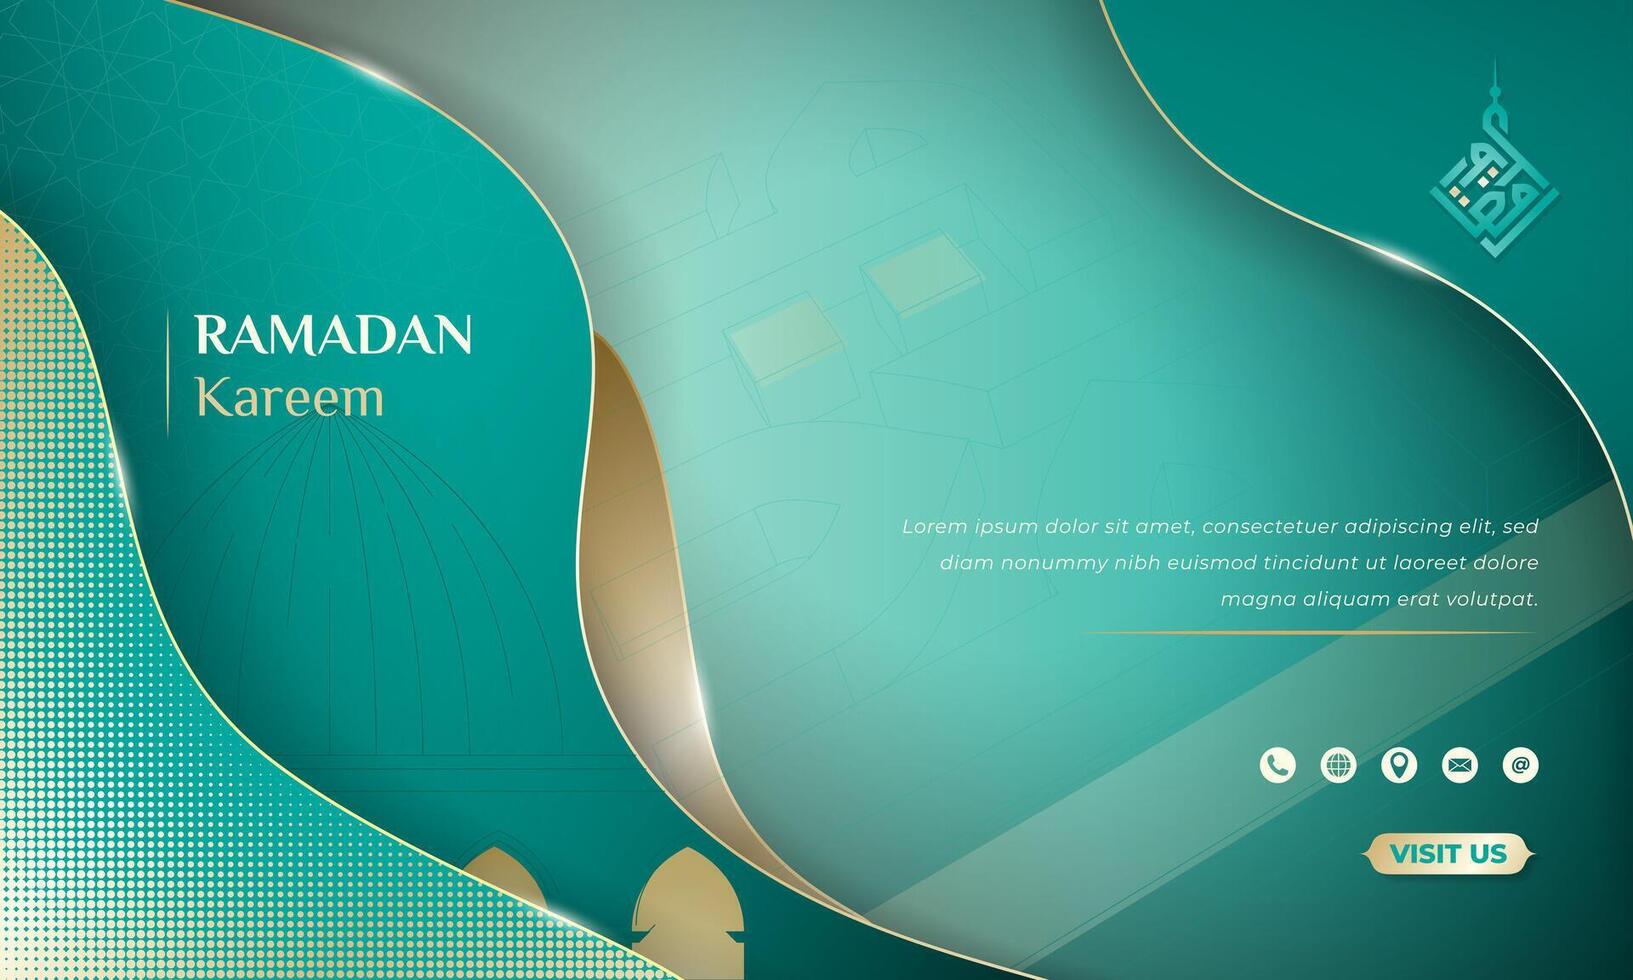 Islamic background in light sea green with gold lines design for ramadan kareem campaign. Arabic text mean is ramadan kareem. vector